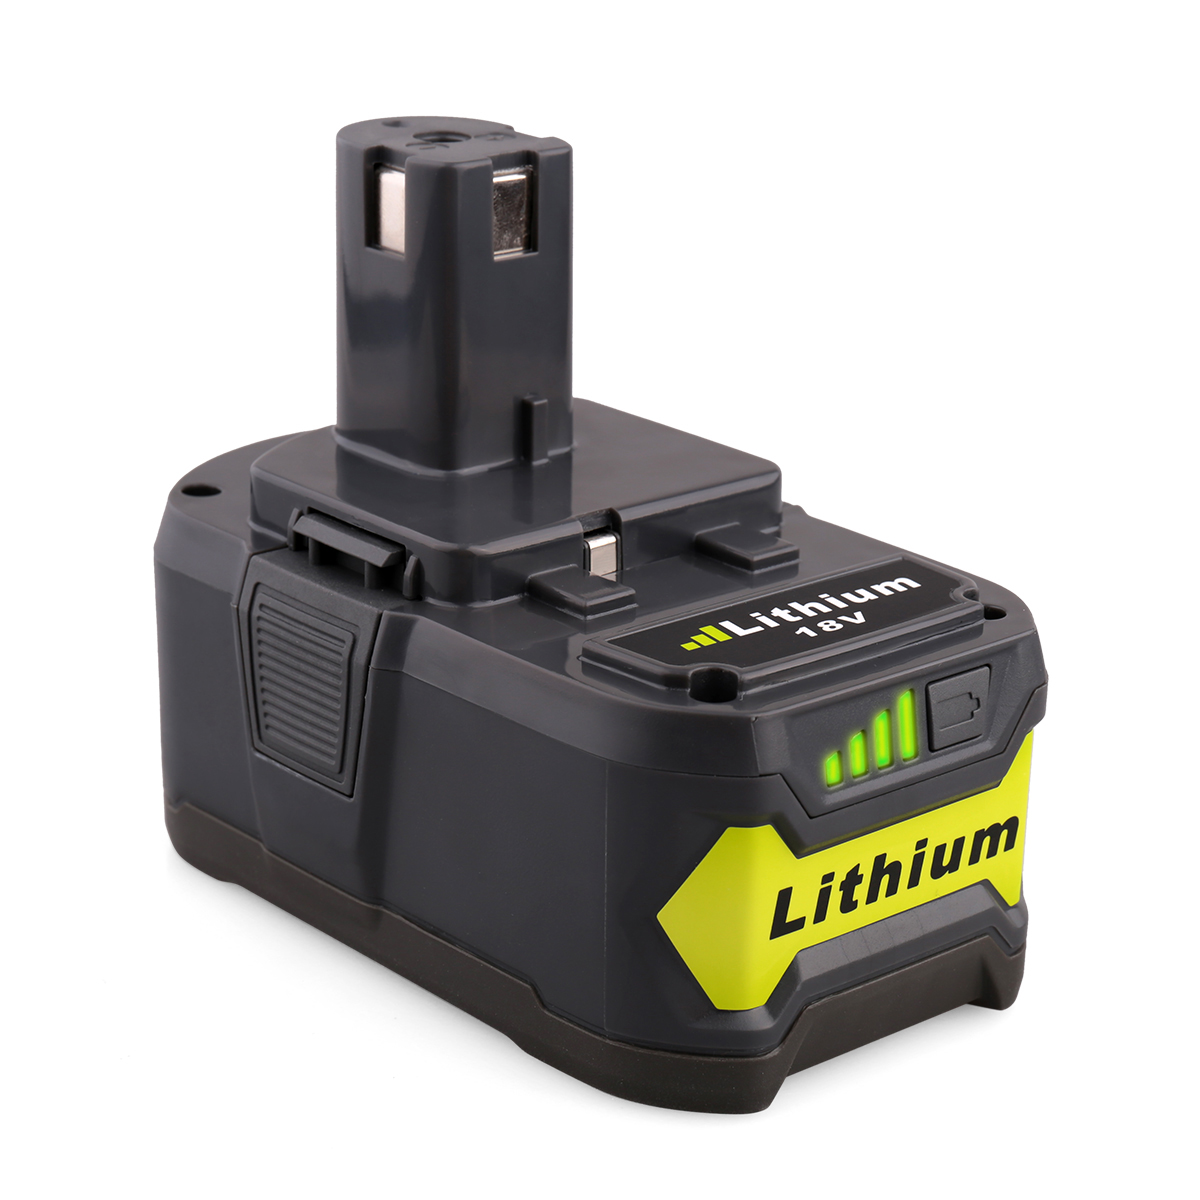 Hilong Li-ion ROB P108 18V battery pack for Power tool